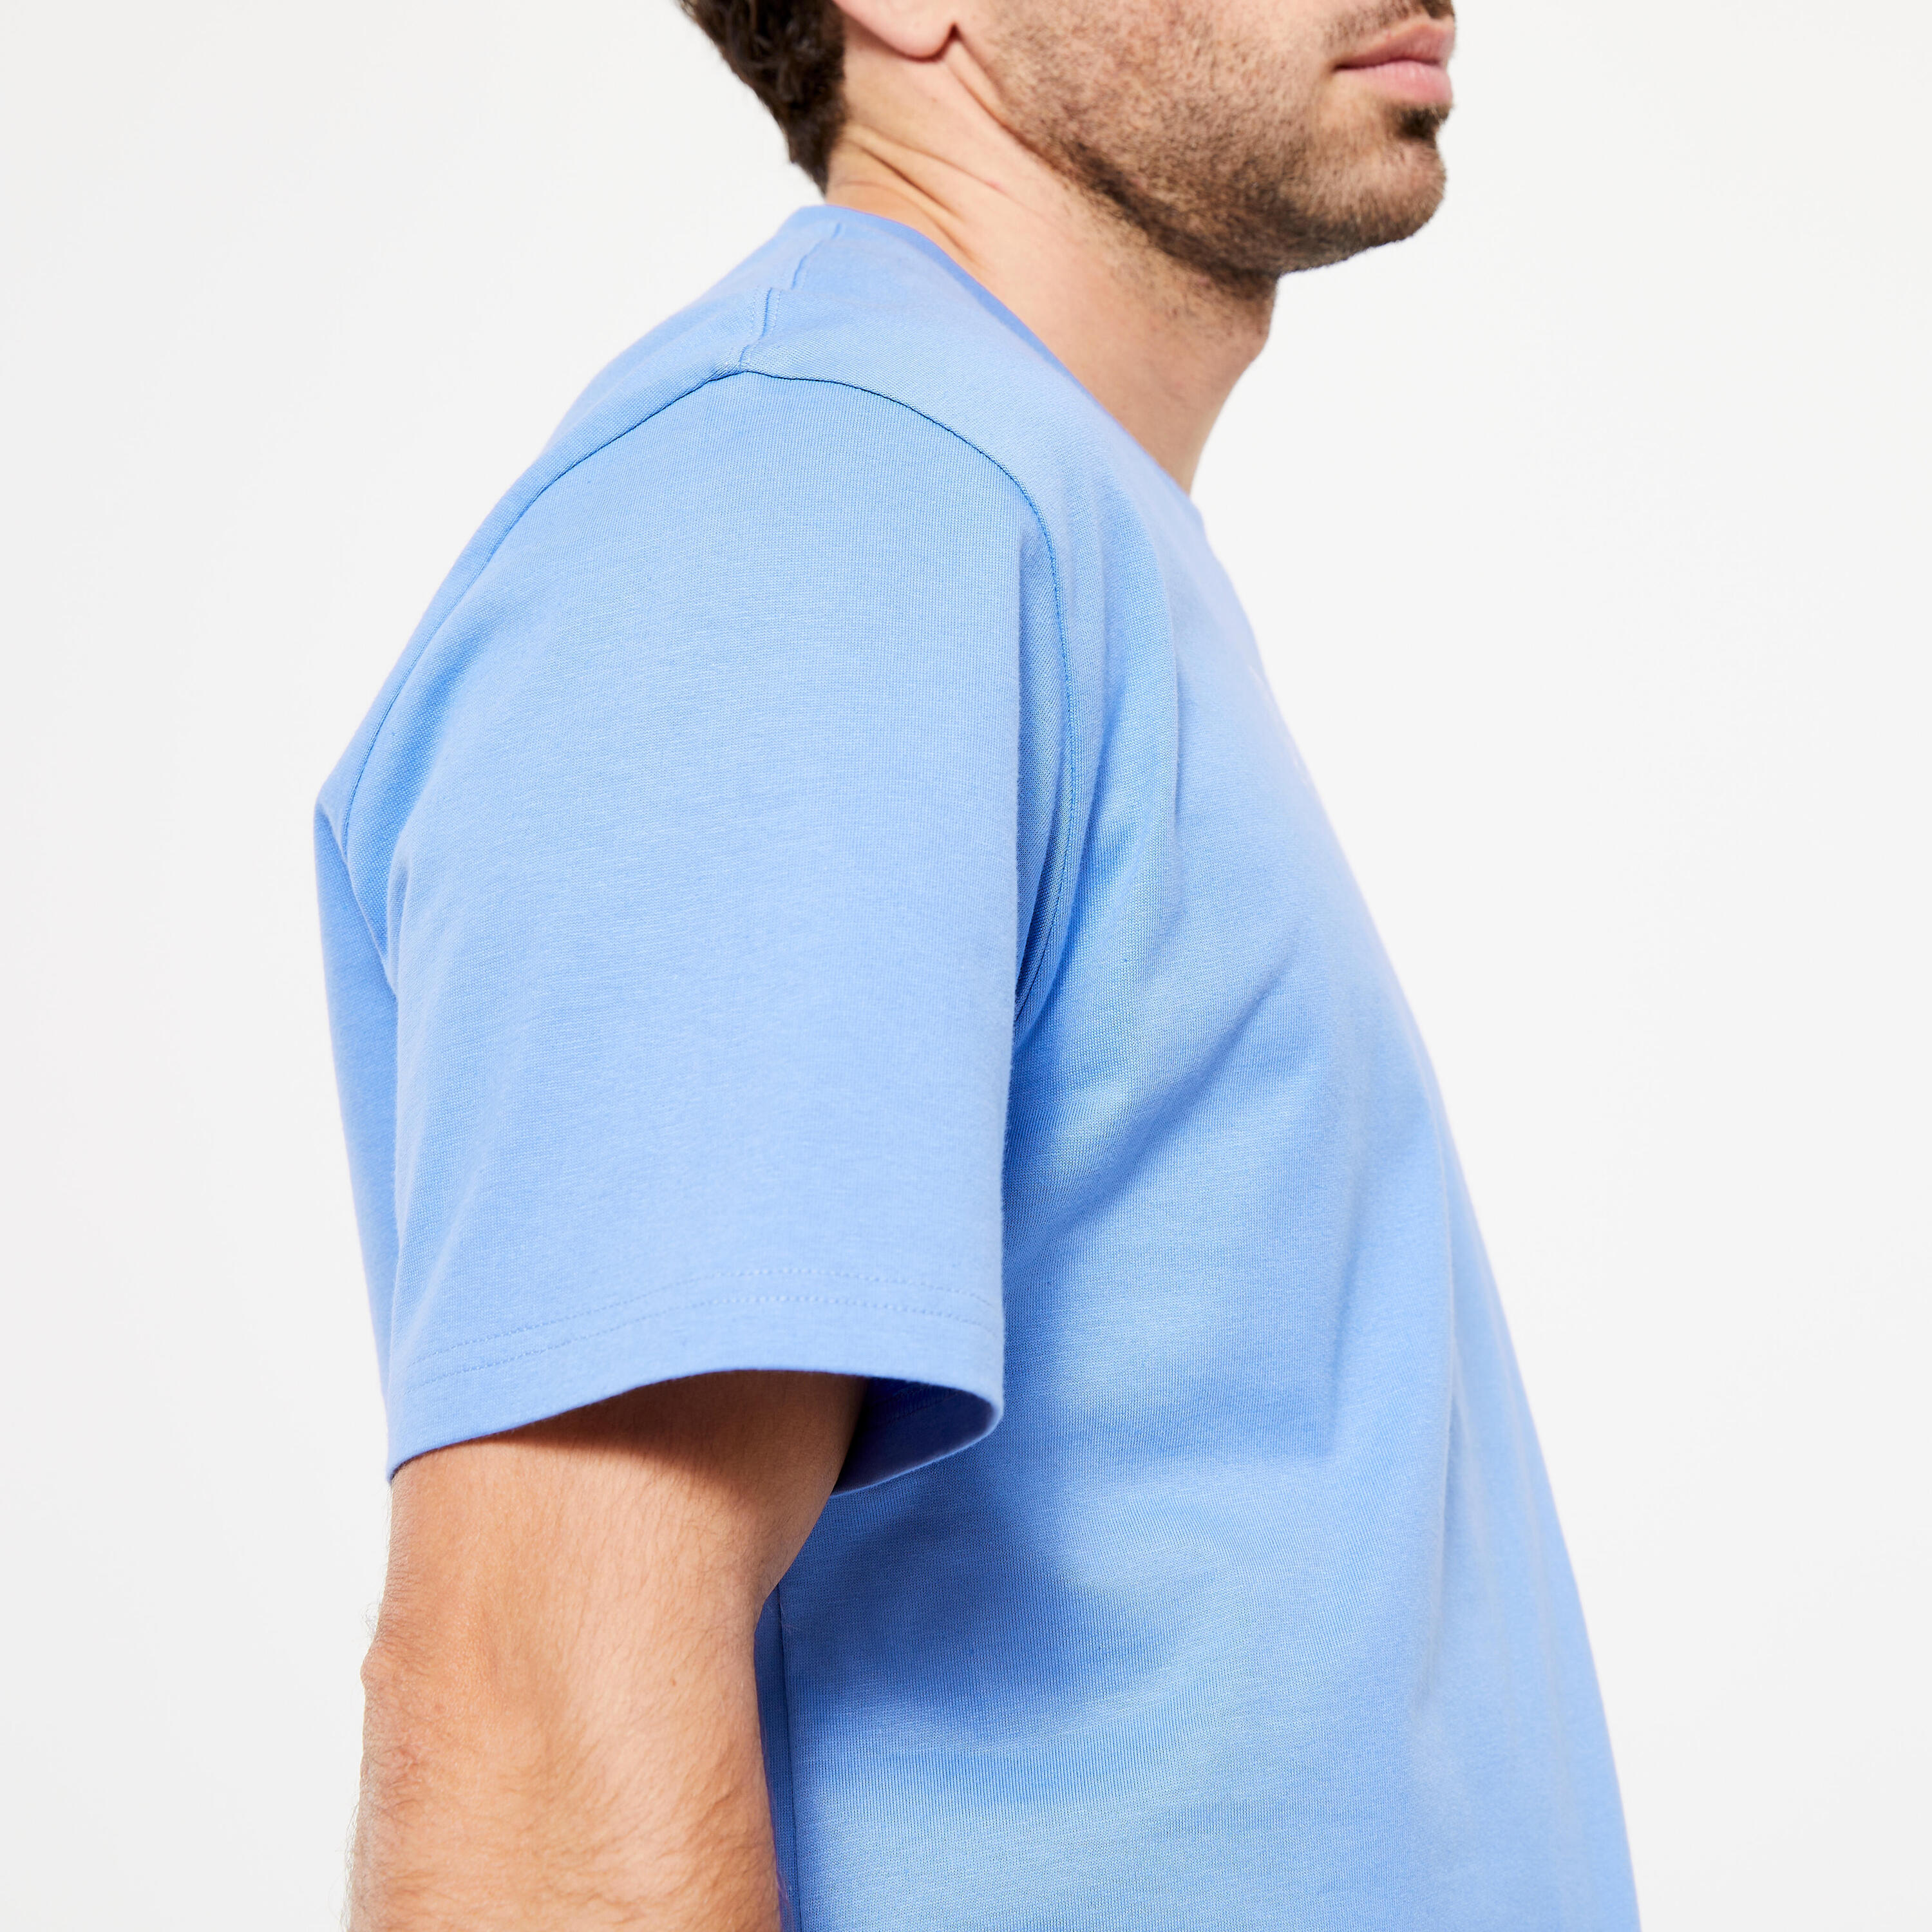 Men's Fitness T-Shirt 500 Essentials - Blue/Lavender Print 4/6